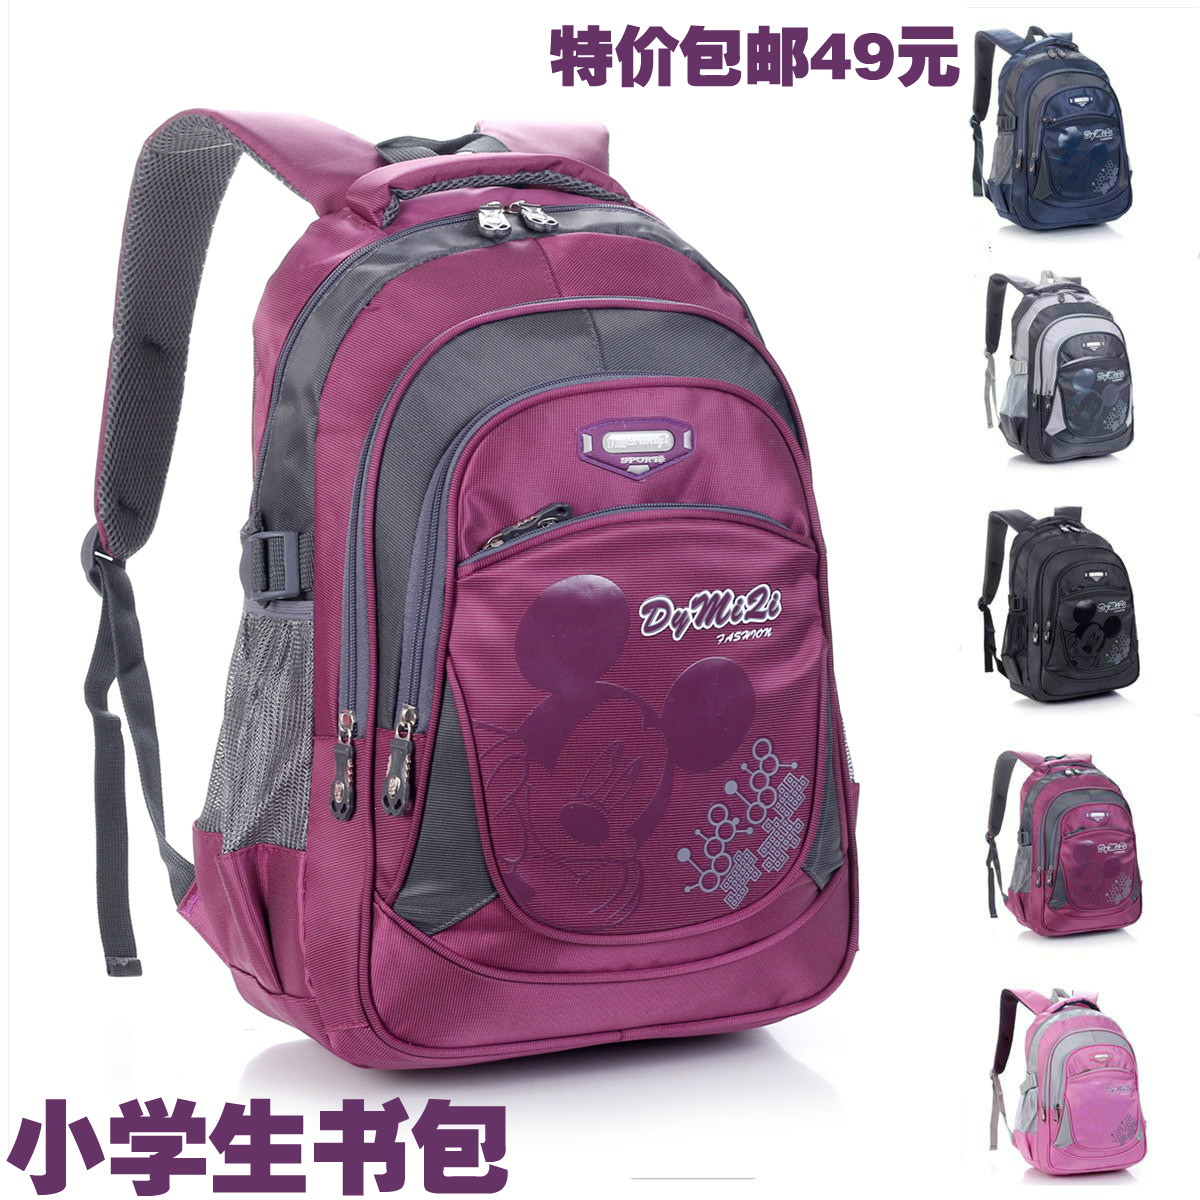 School-Bags-children-s-Backpack-mickey-backpacks-Unisex-Canvas ...